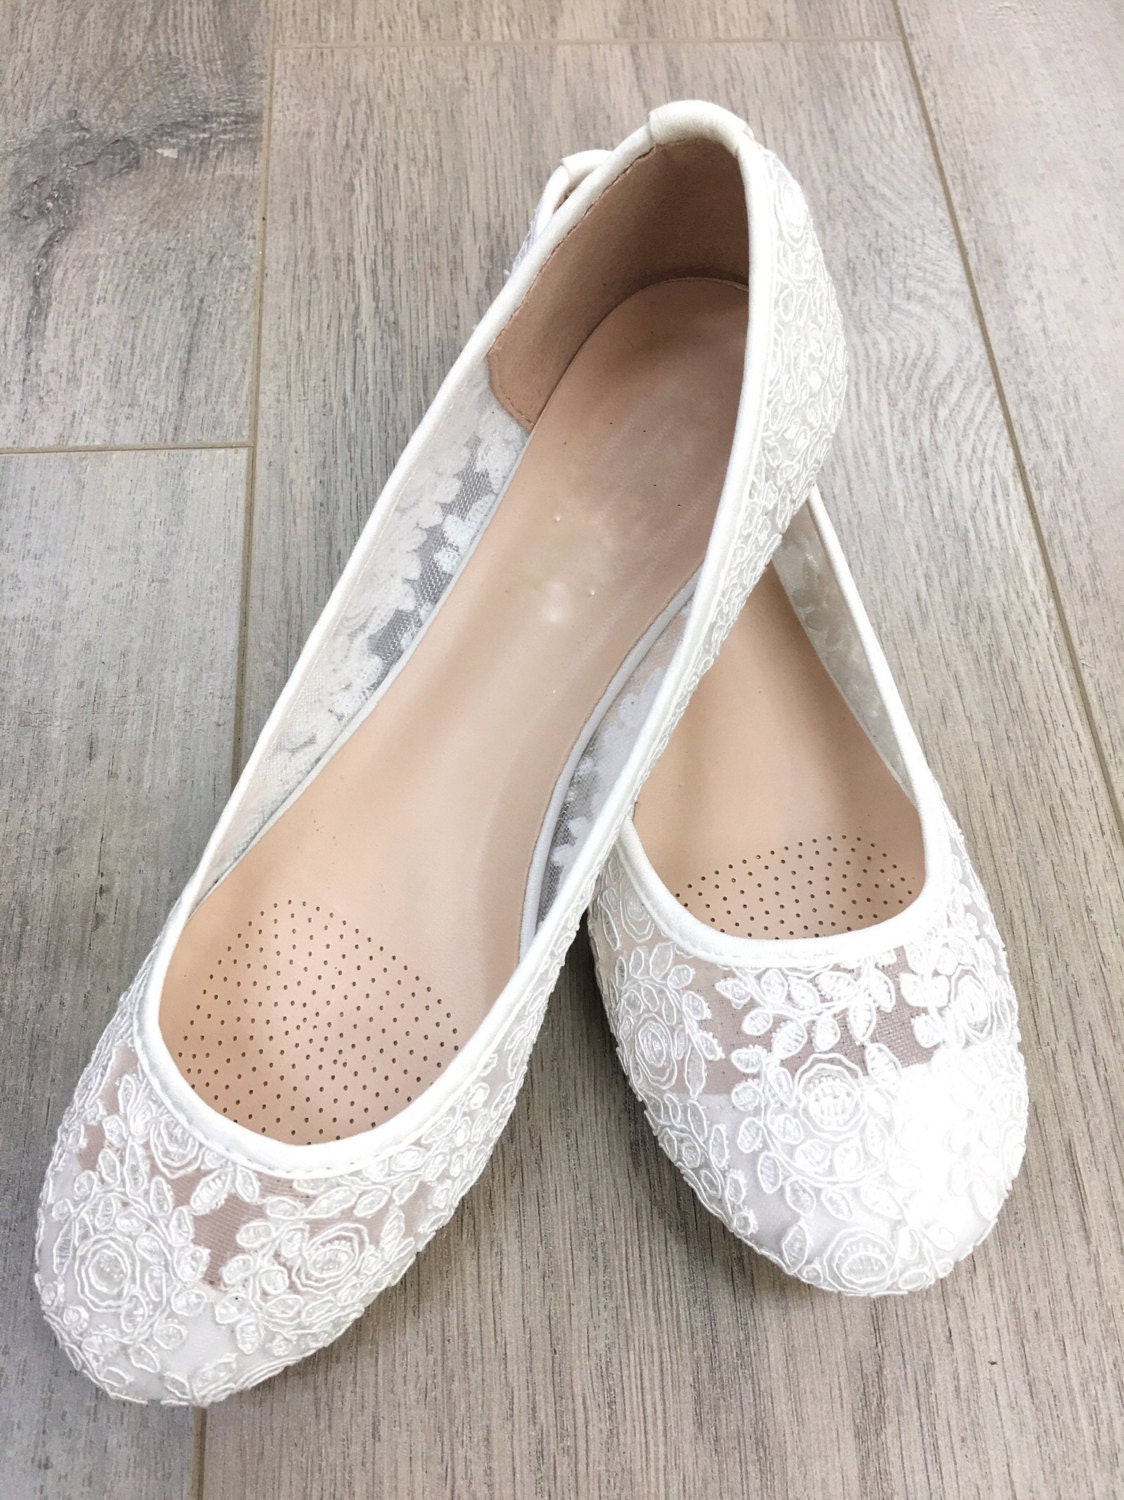 Women Wedding Shoes Bridesmaid Shoes White lace flats